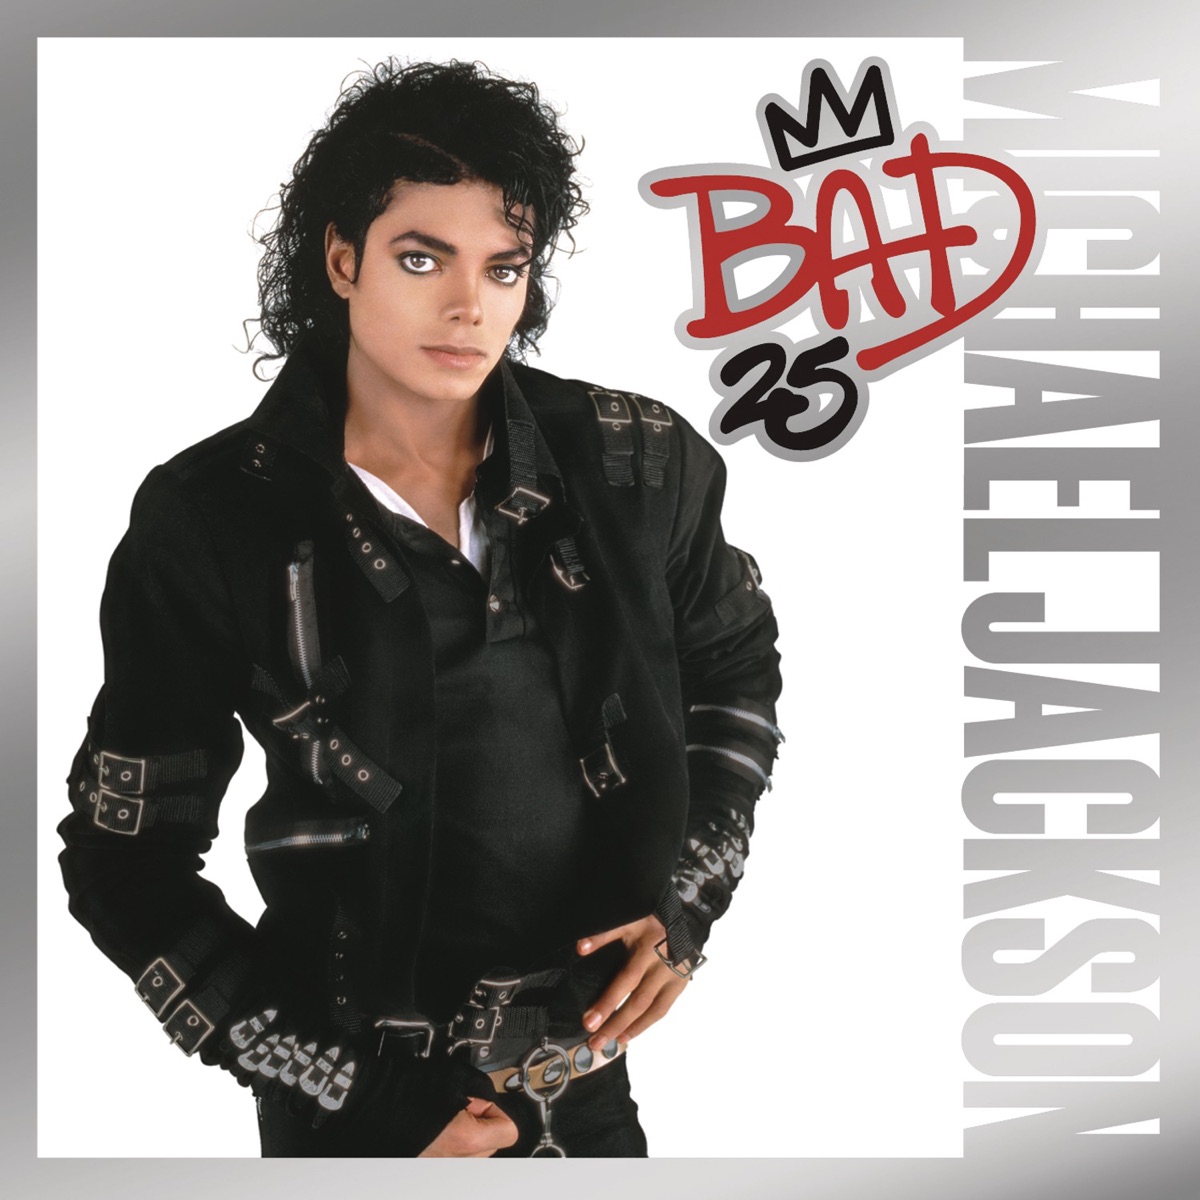 Bad de Michael Jackson en Apple Music